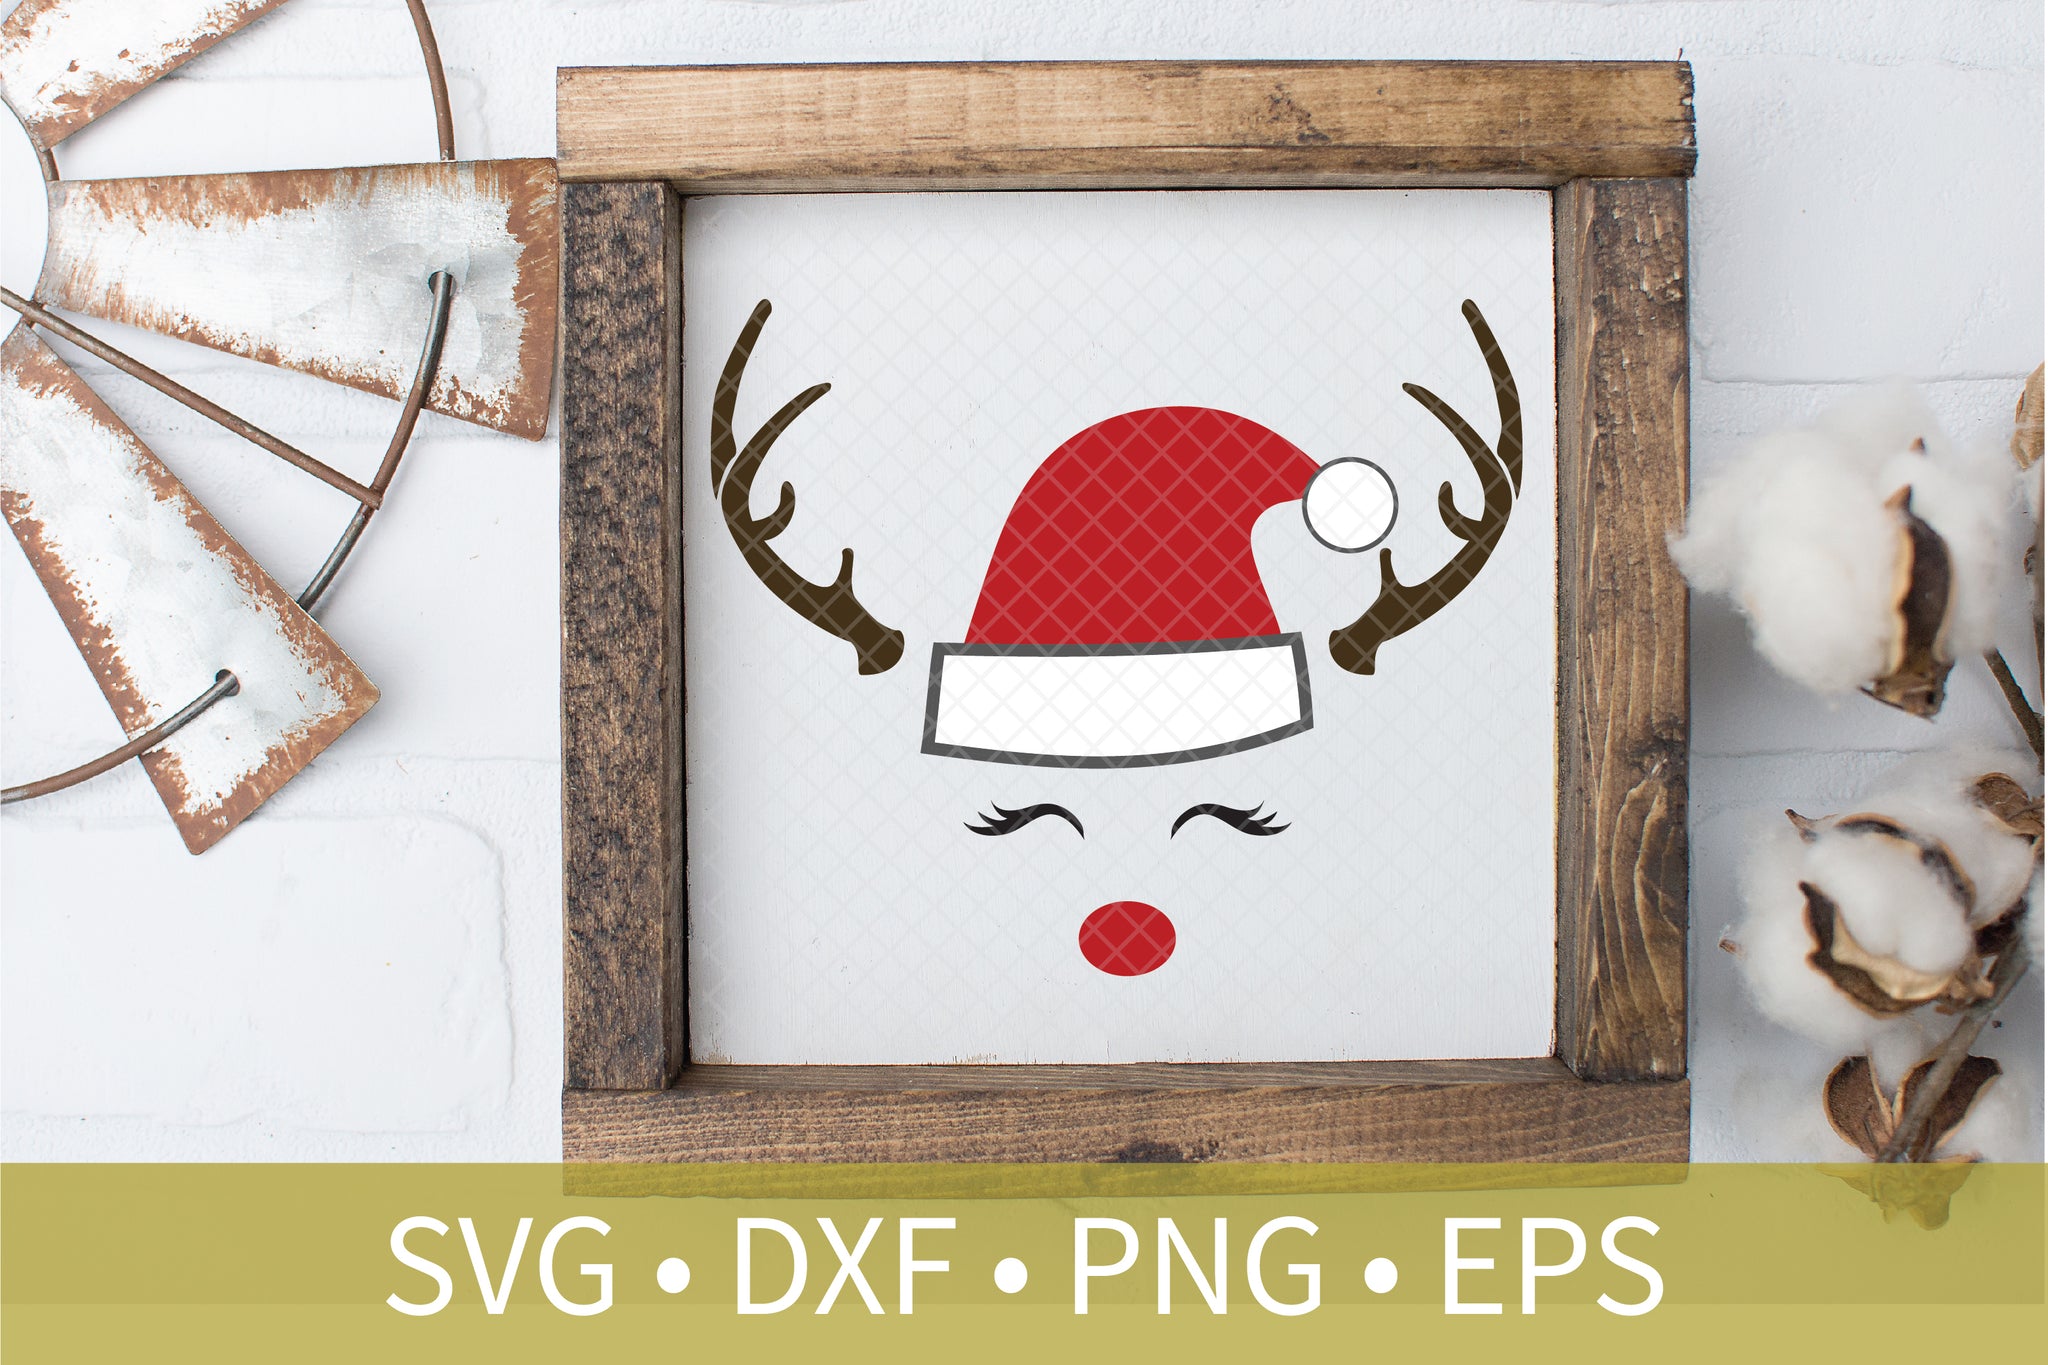 Santa Reindeer svg dxf eps png file - Christmas svg dxf clipart - Christmas Decor DIY Craft - Christmas Antlers Sign Stencil